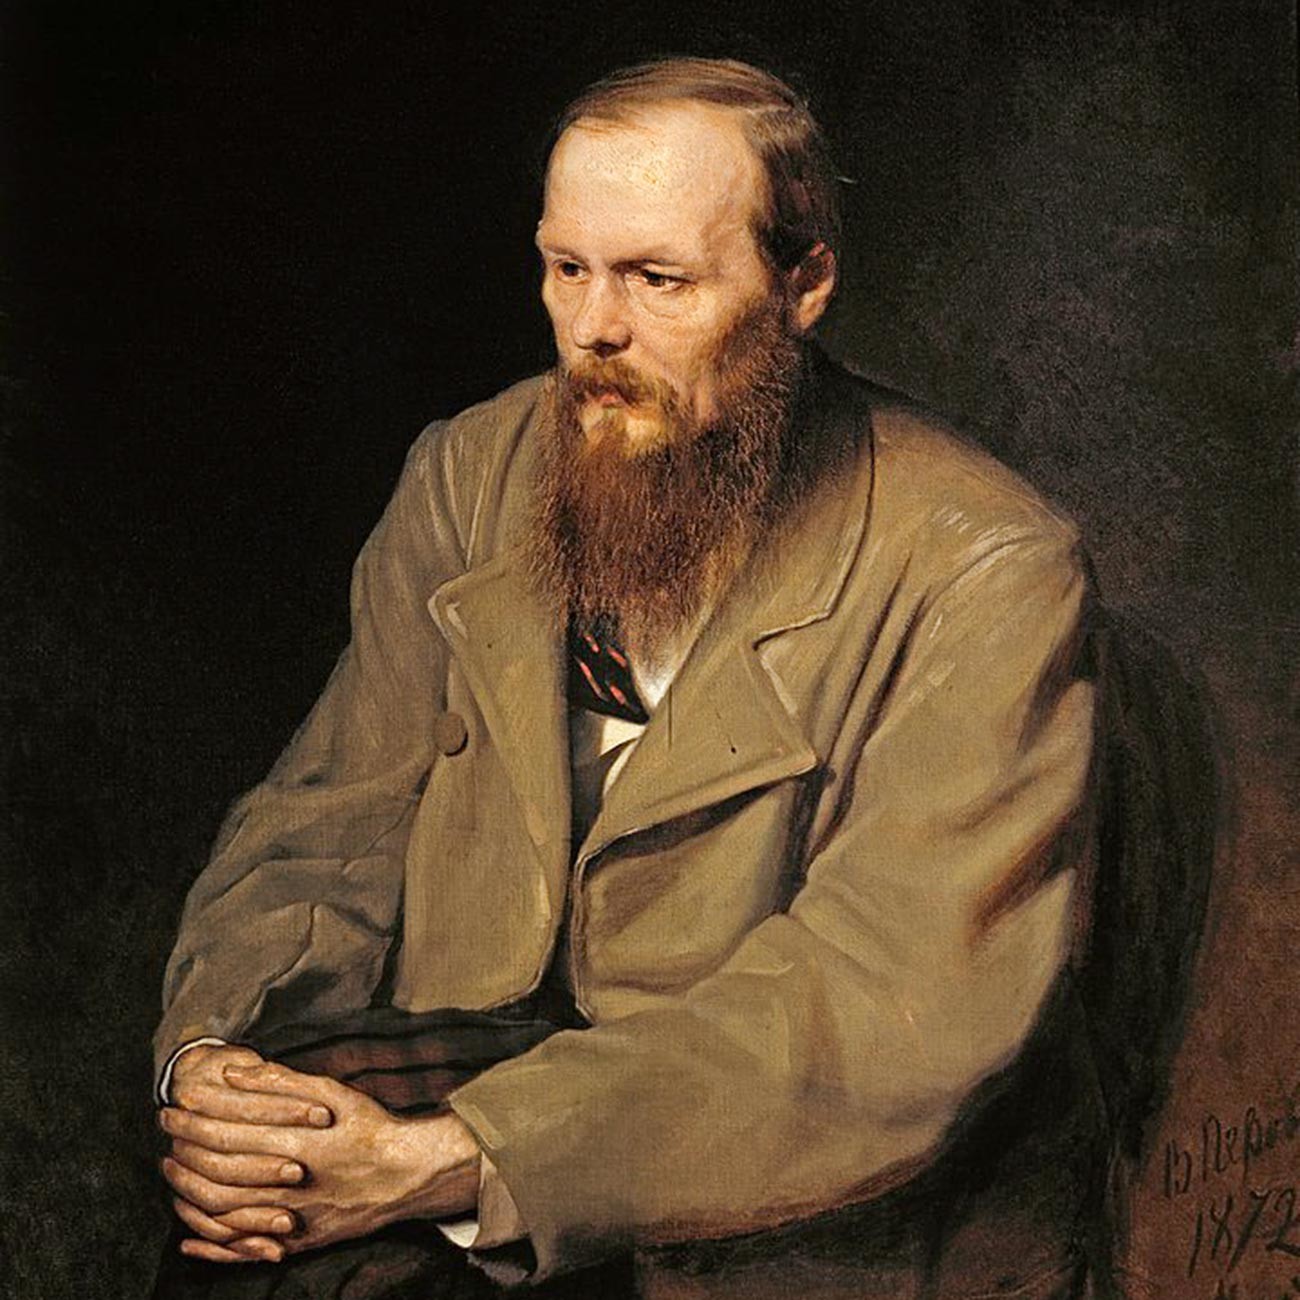 A portrait of Fyodor Dostoyevsky.